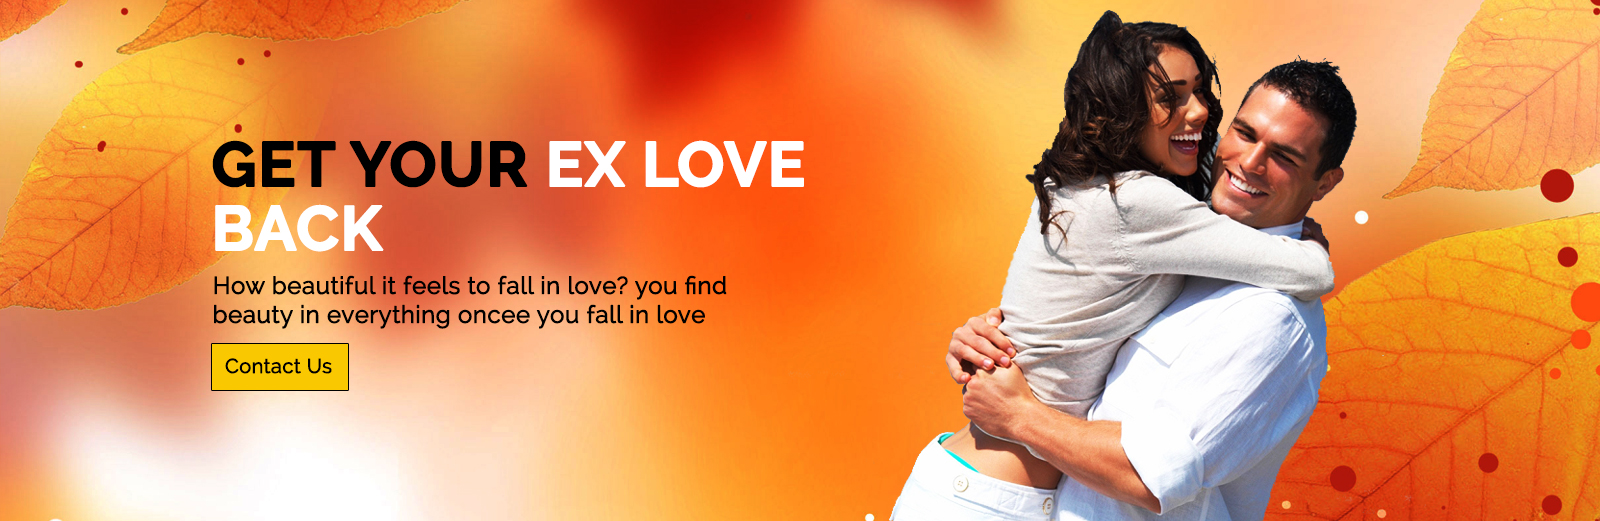 Get-your-ex-love-back